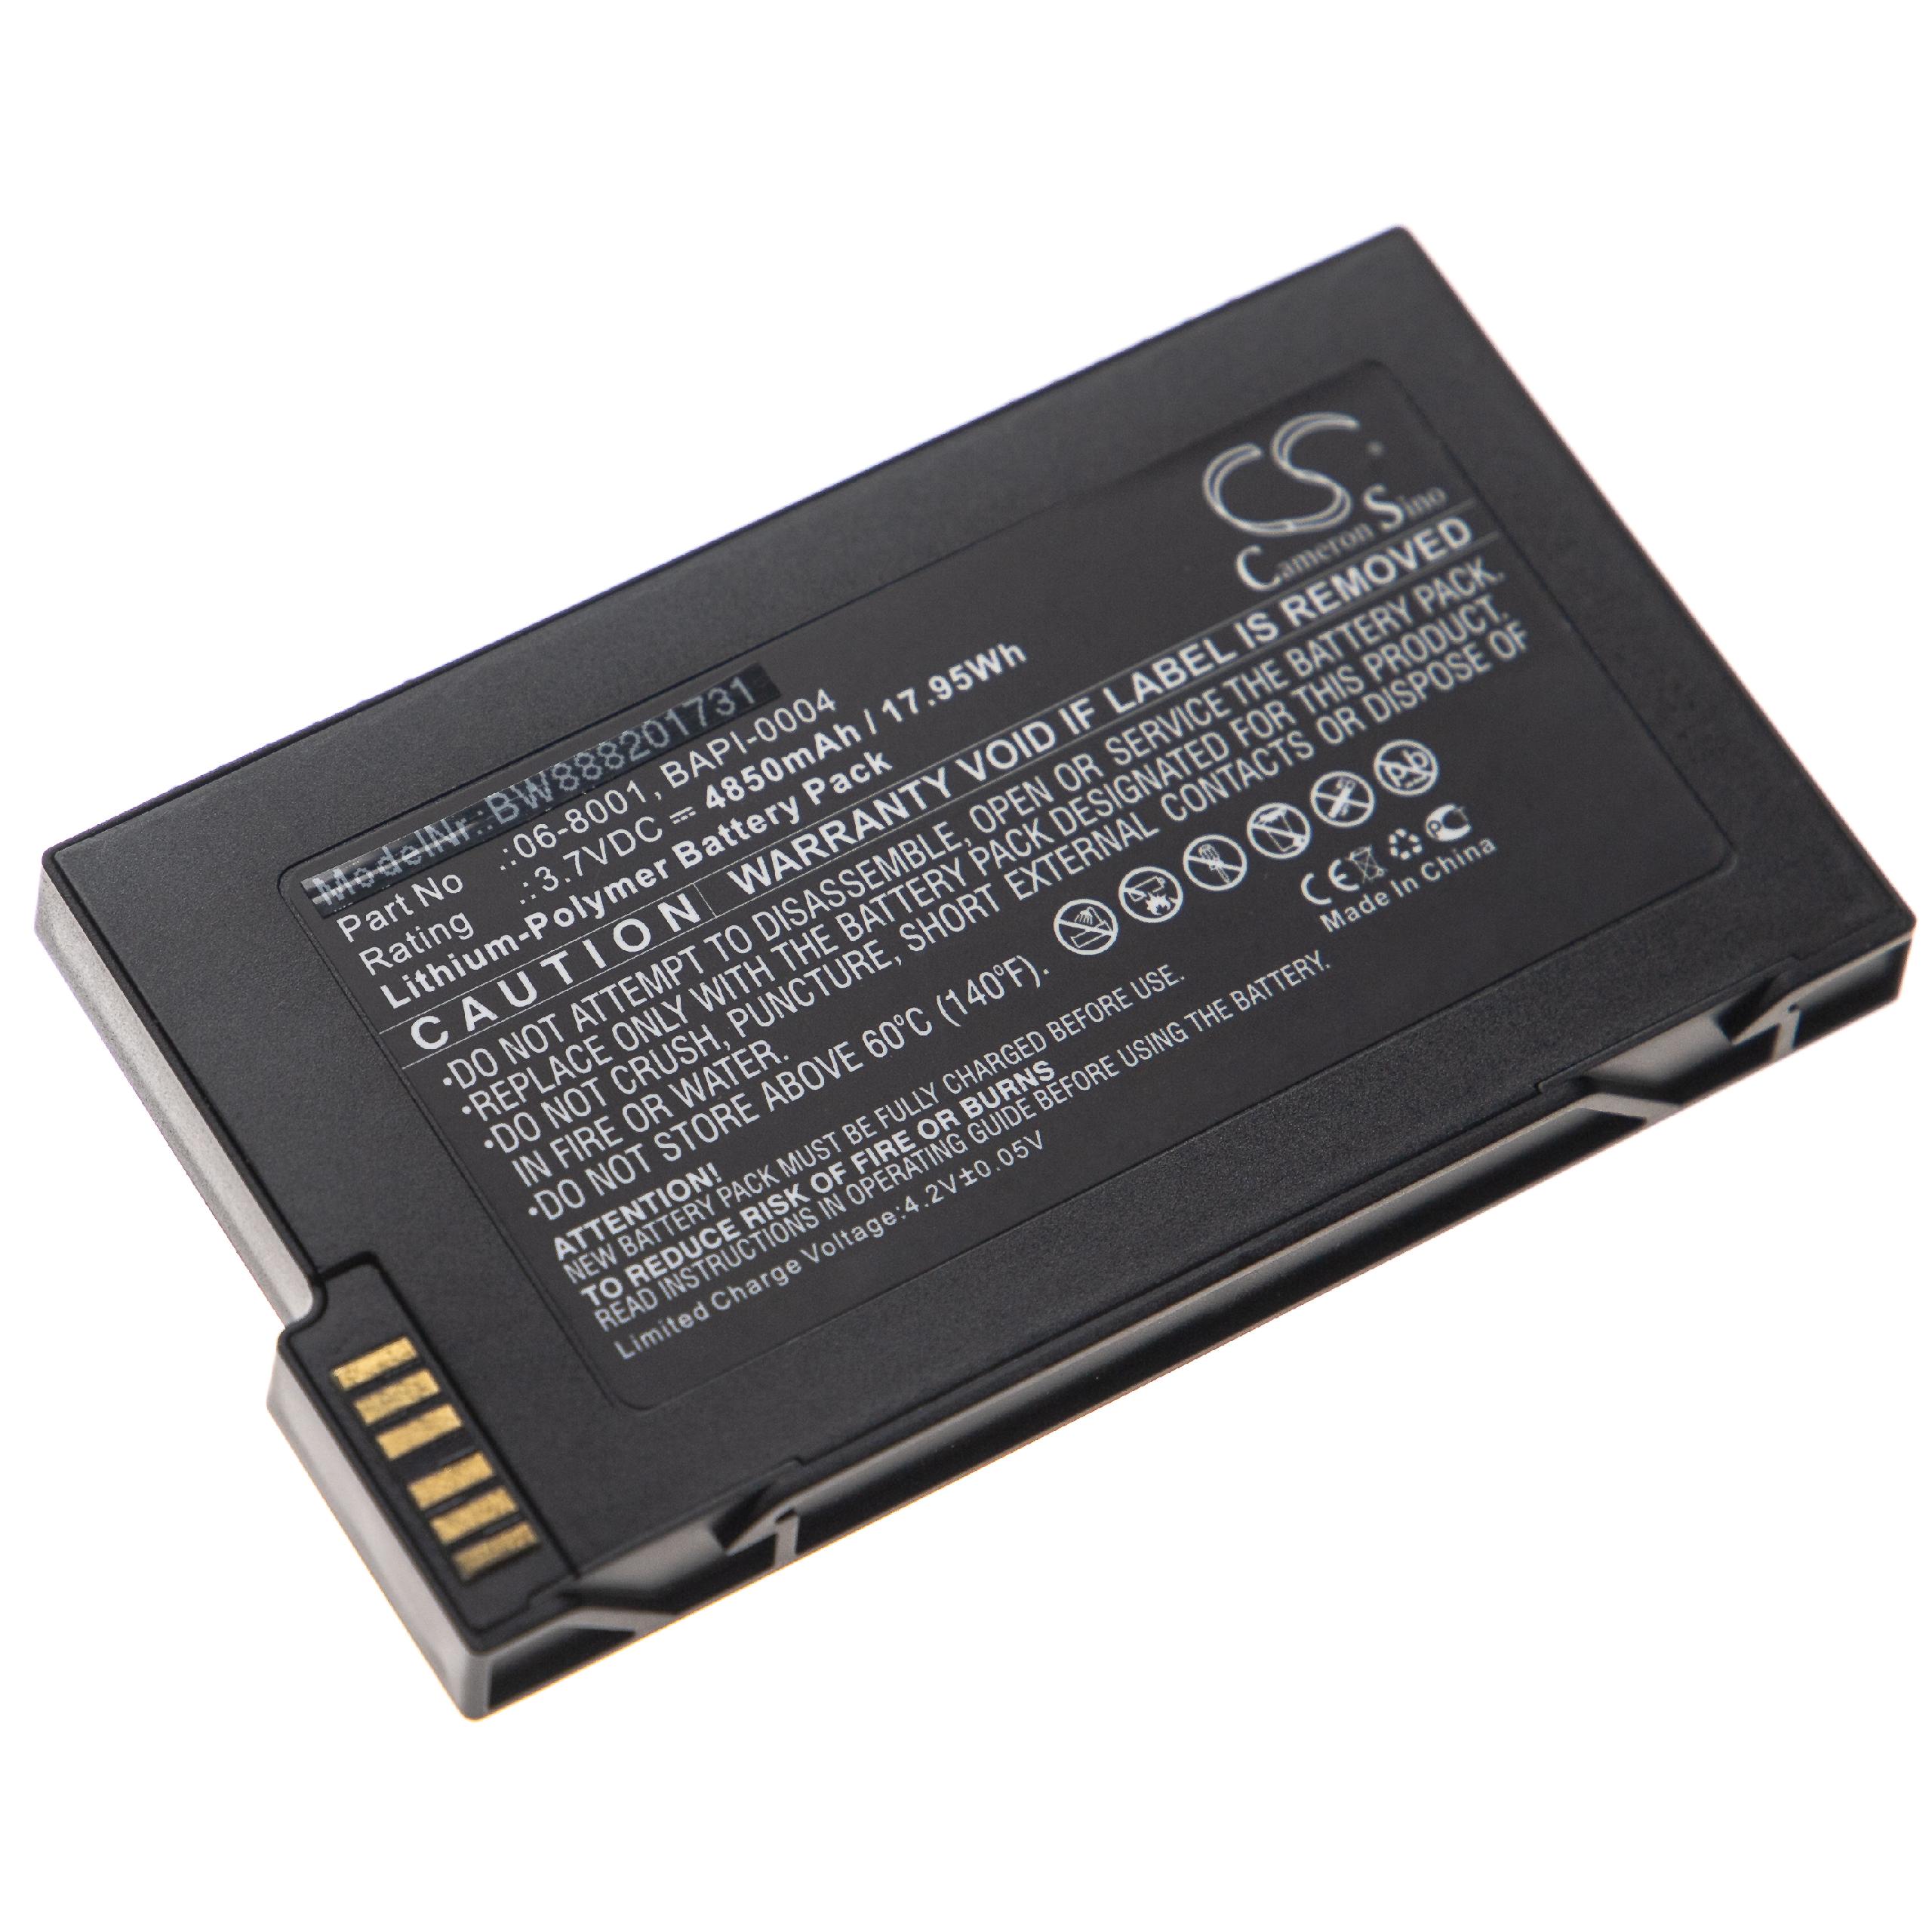 Batería reemplaza HumanWare 06-8001, BAPI-0004 para tablet braille HumanWare - 4850 mAh 3,7 V Li-poli